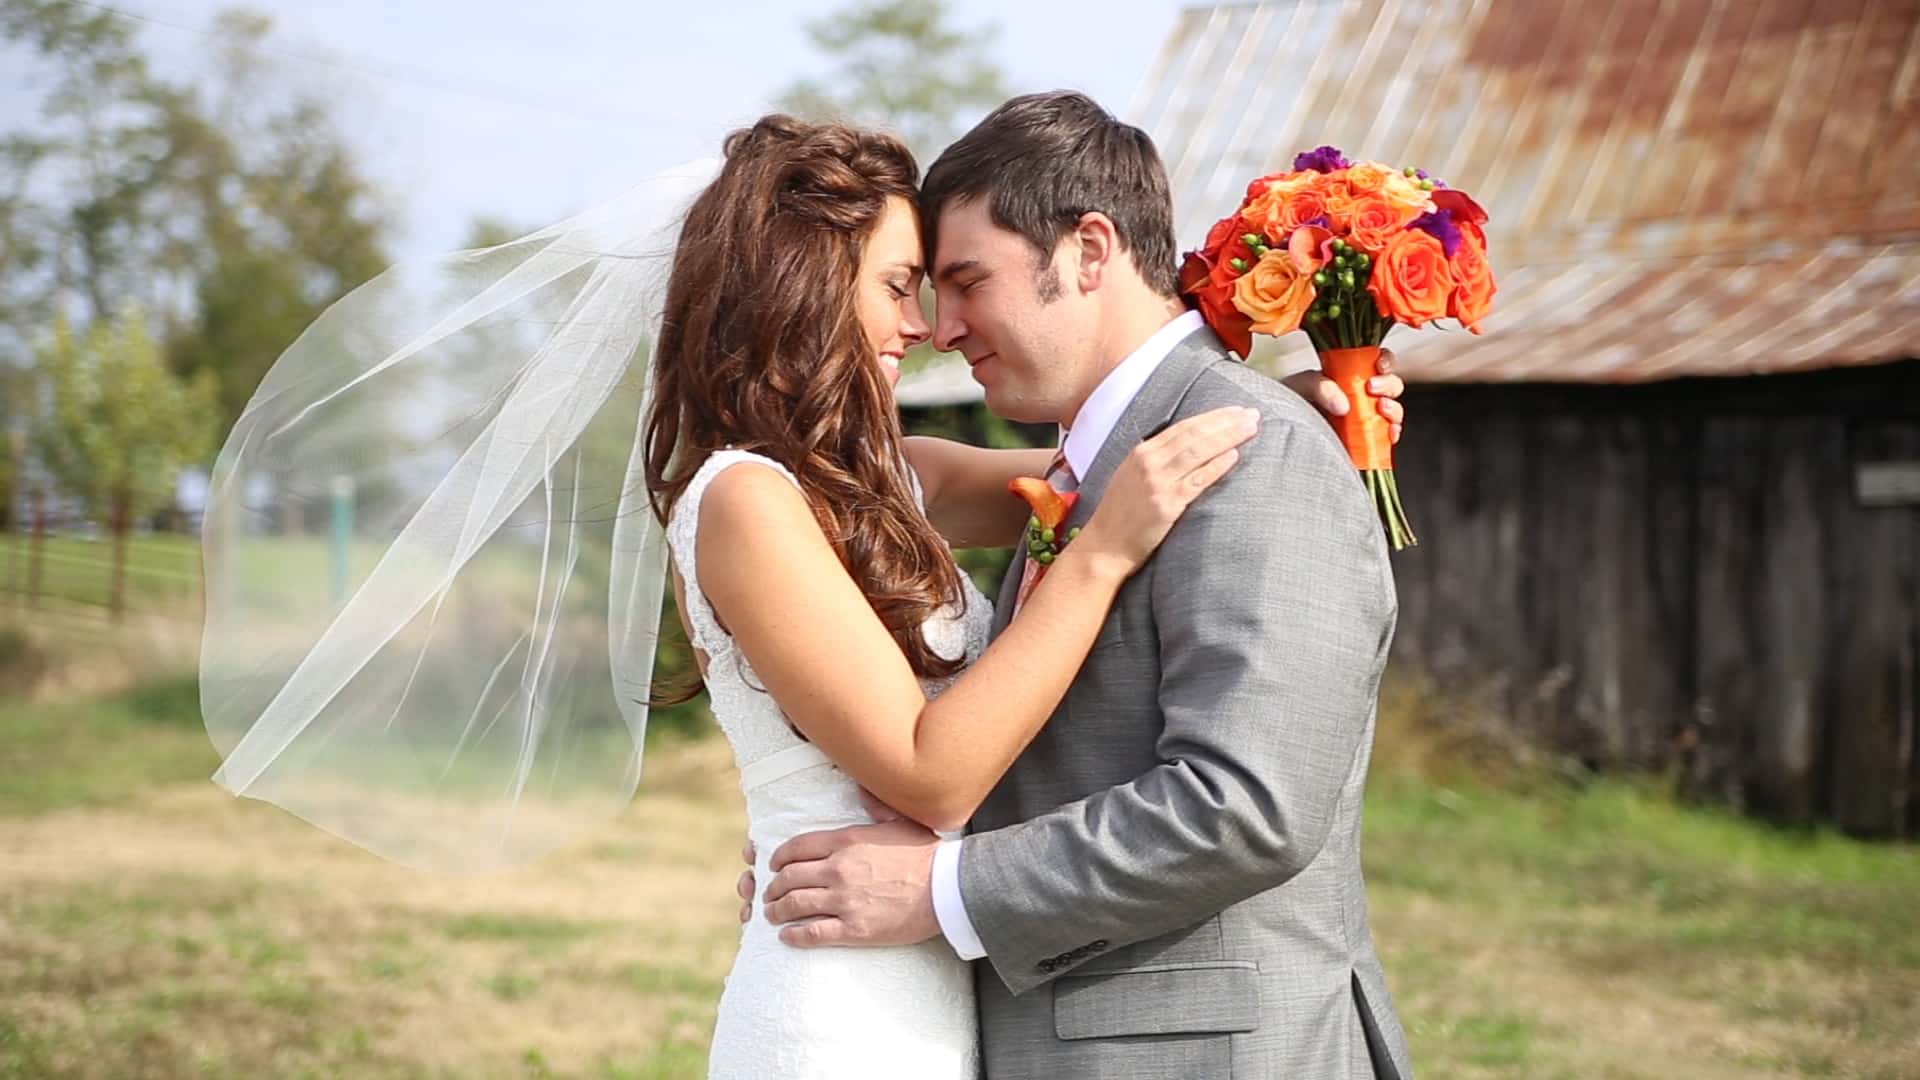 Wedding Video Highlights: Ted + Amanda